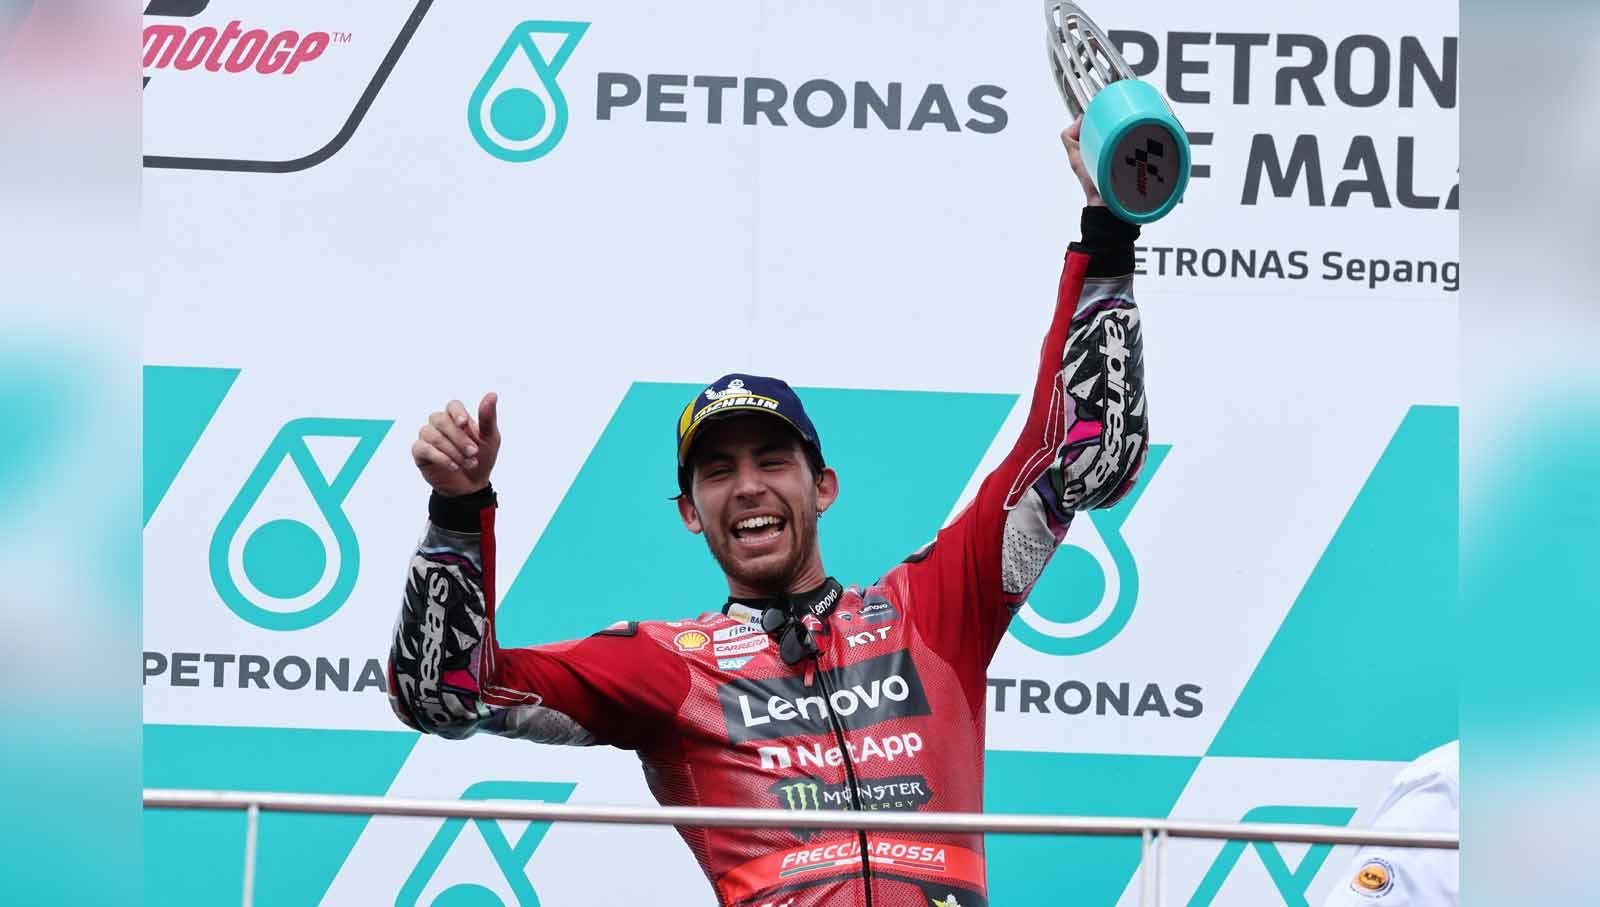 Sang juara Enea Bastianini merayakan di podium dengan tropi usai memenangkan balapan MotoGP Malaysia. (Foto: REUTERS/Hasnoor Hussain)